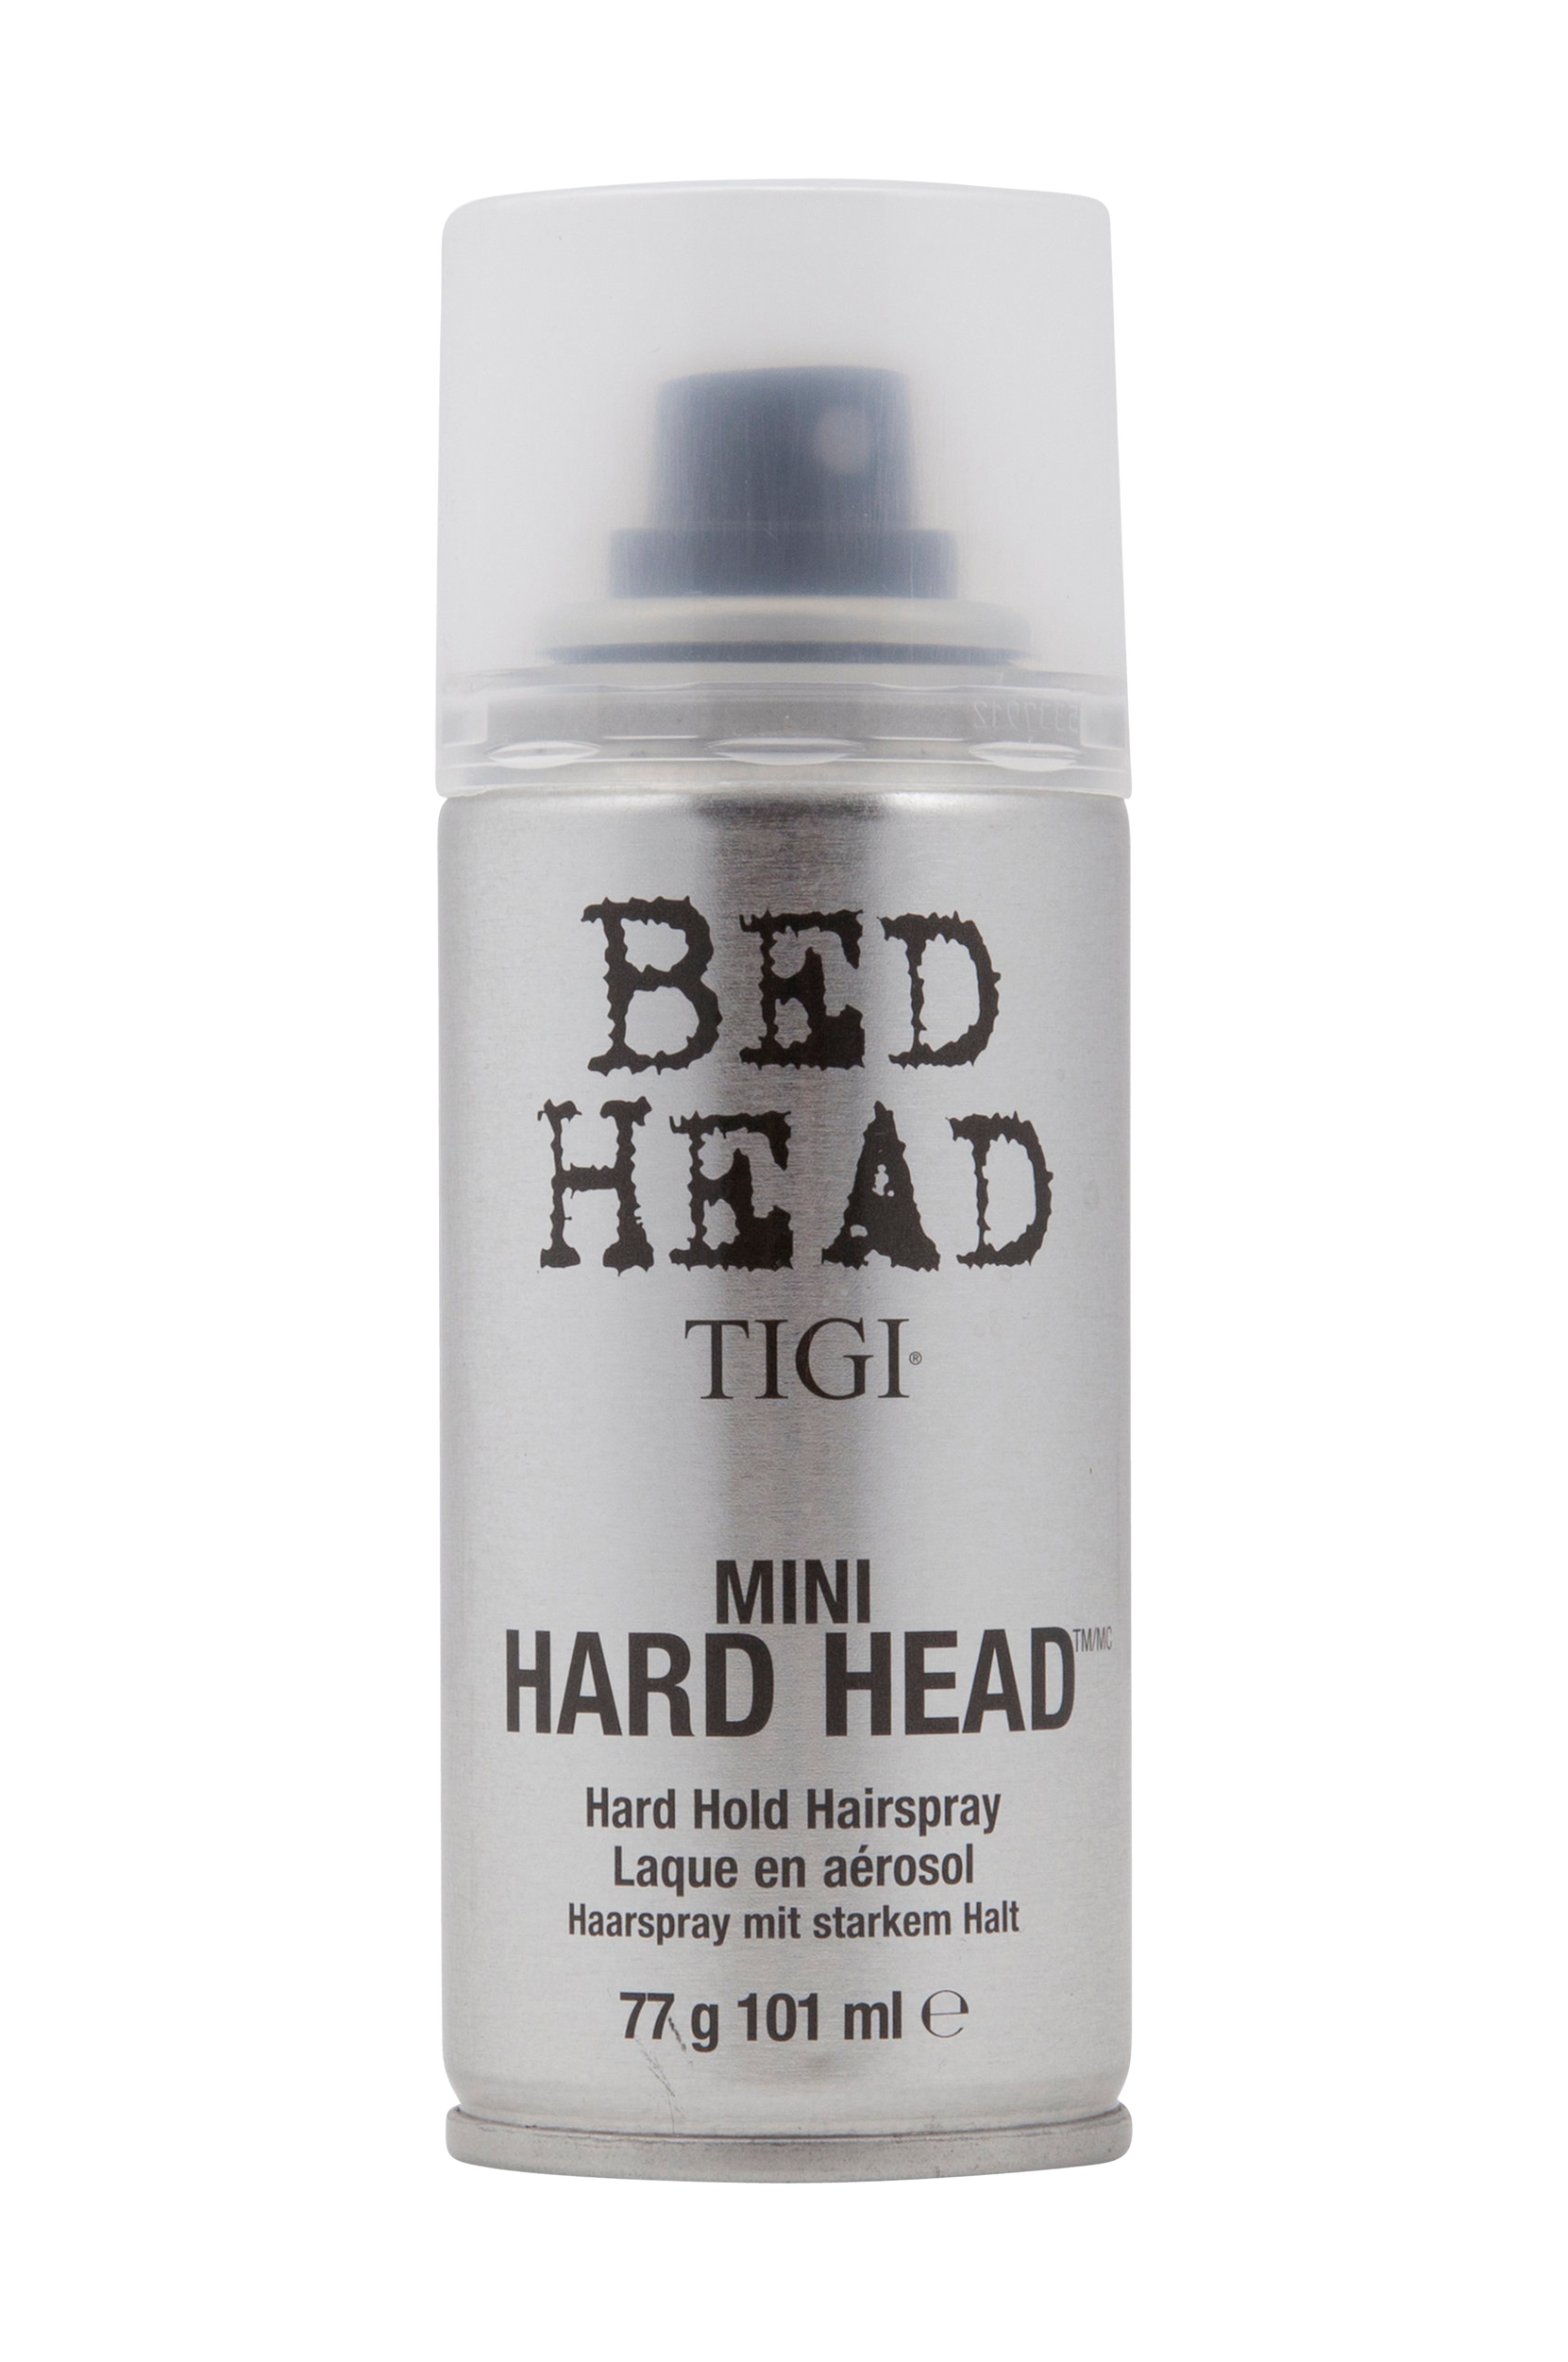 Hard Head Mini Hairspray 100 ml, Tigi